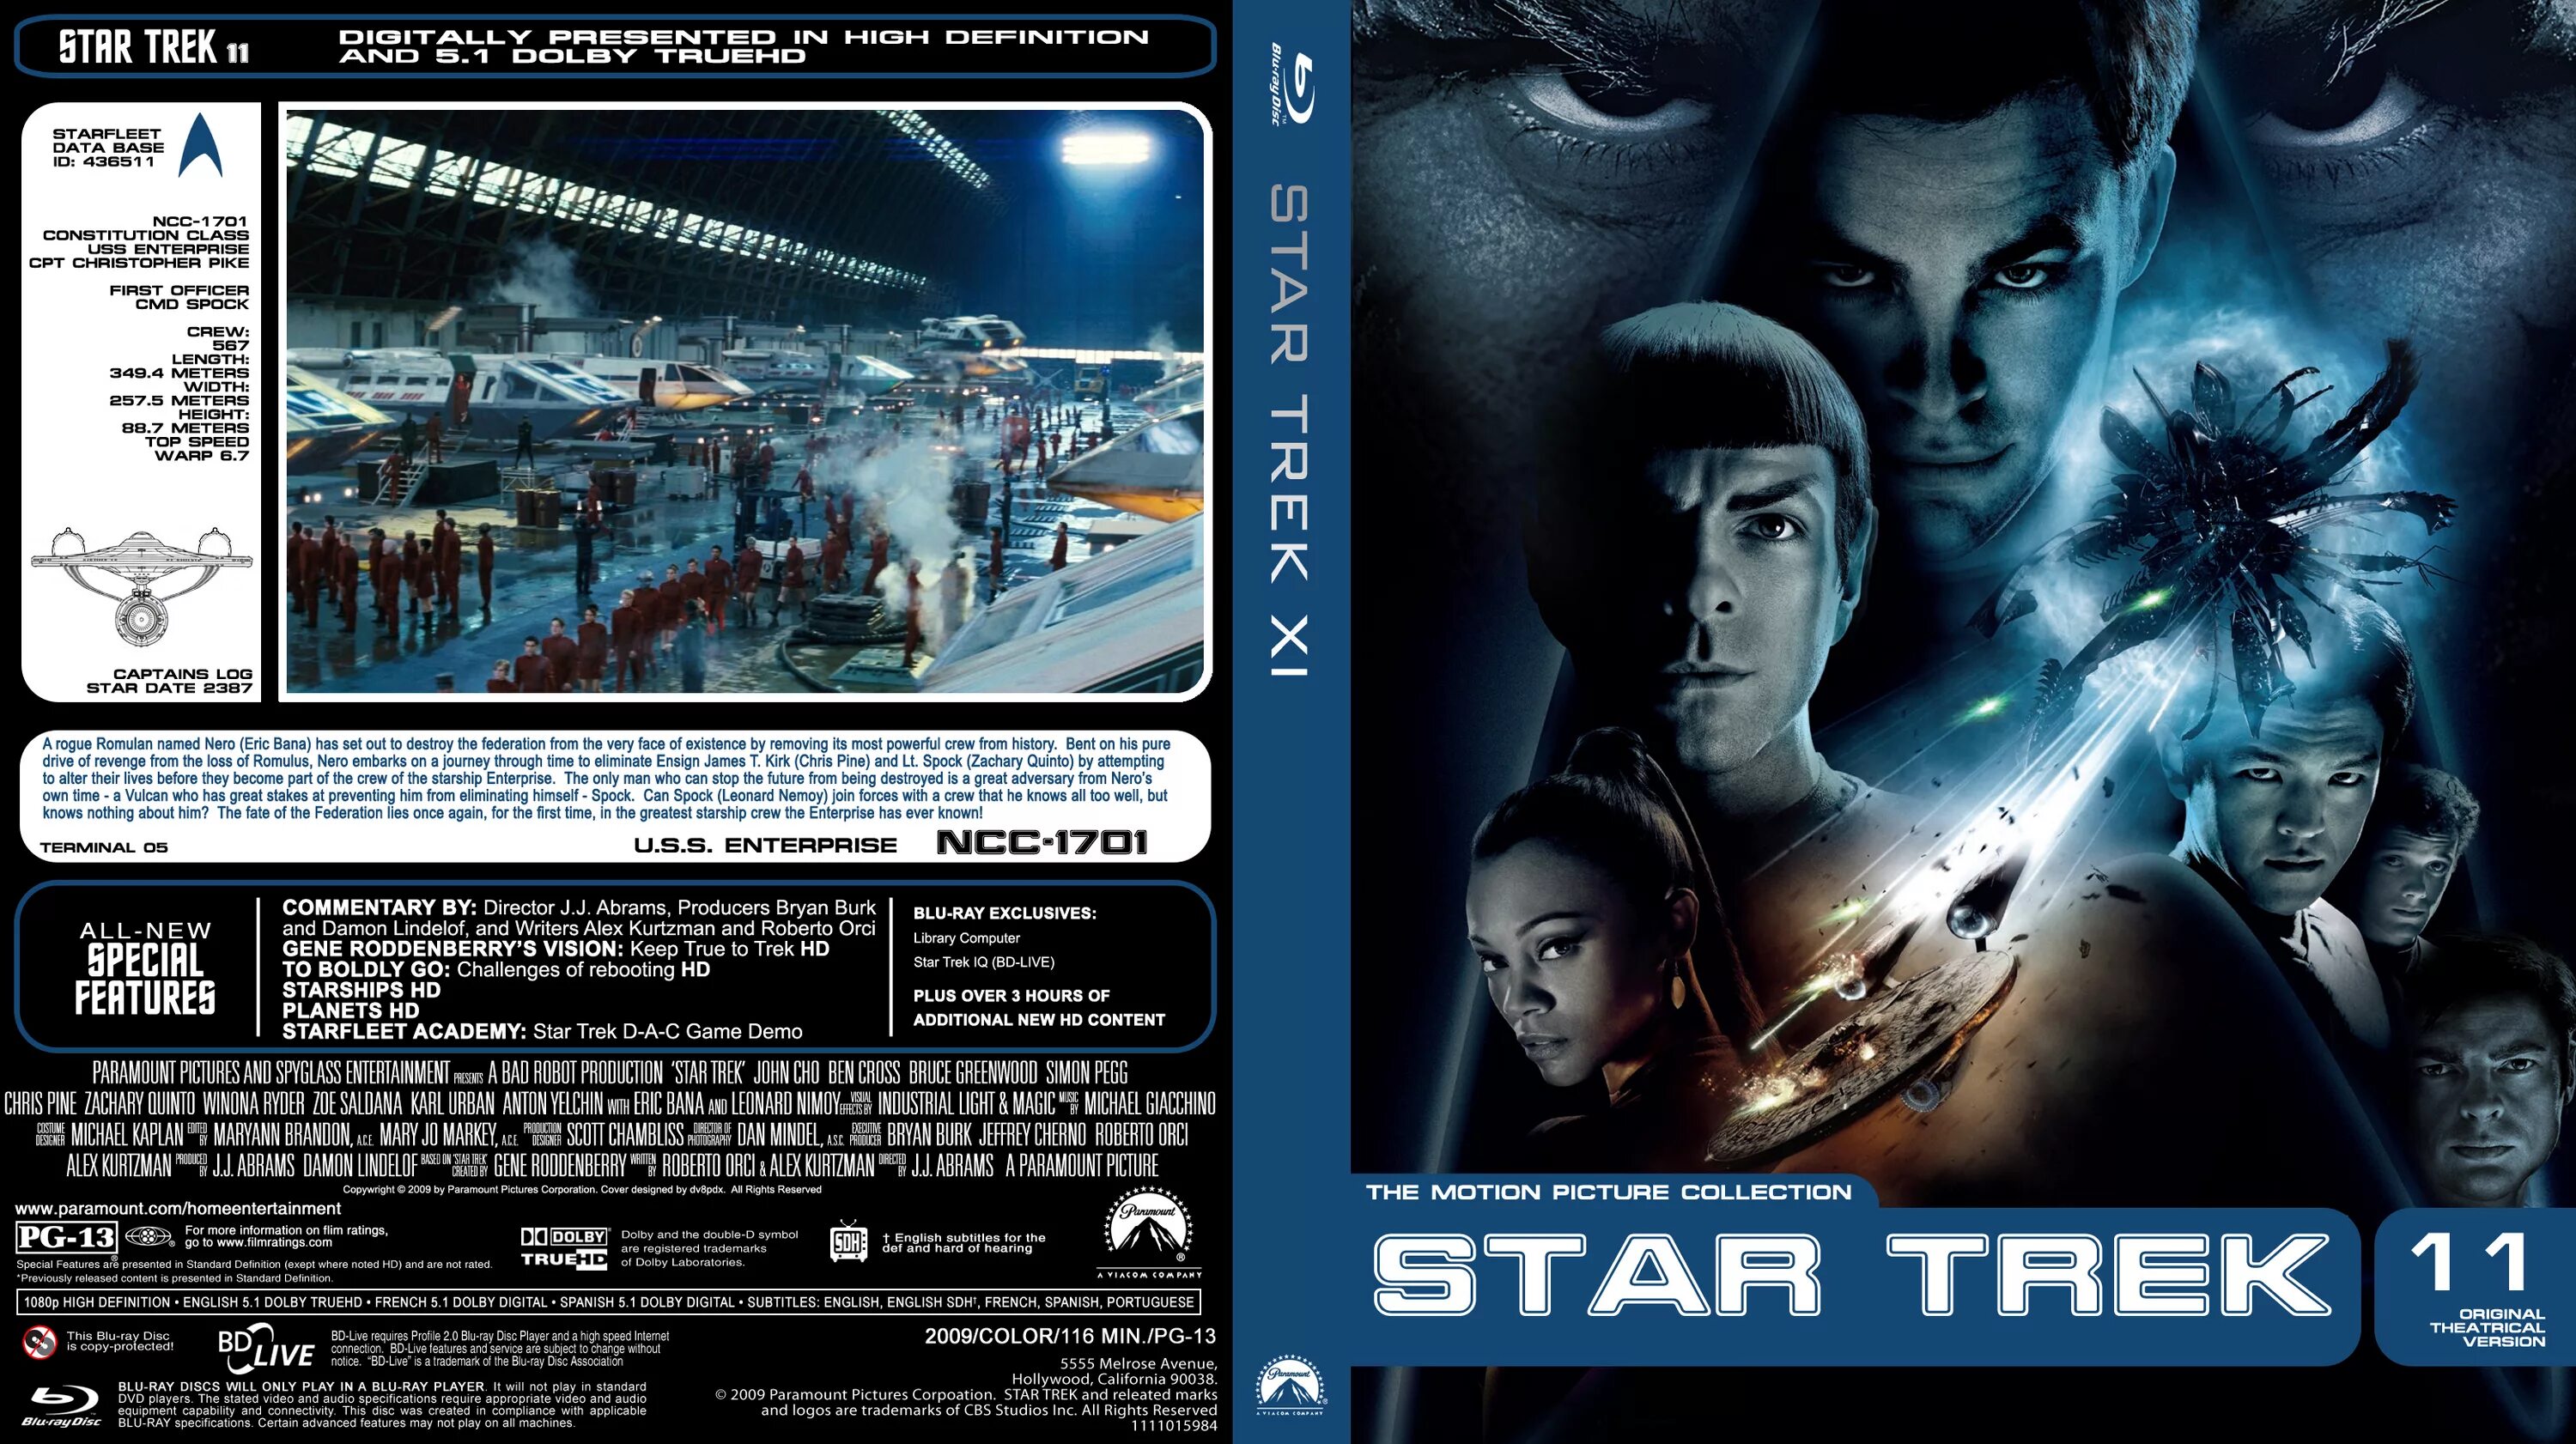 Star Trek 2009 Blu ray. Star Trek 2009 обложка. Star Trek 2009 DVD Cover. Магическая битва 2 блю рей